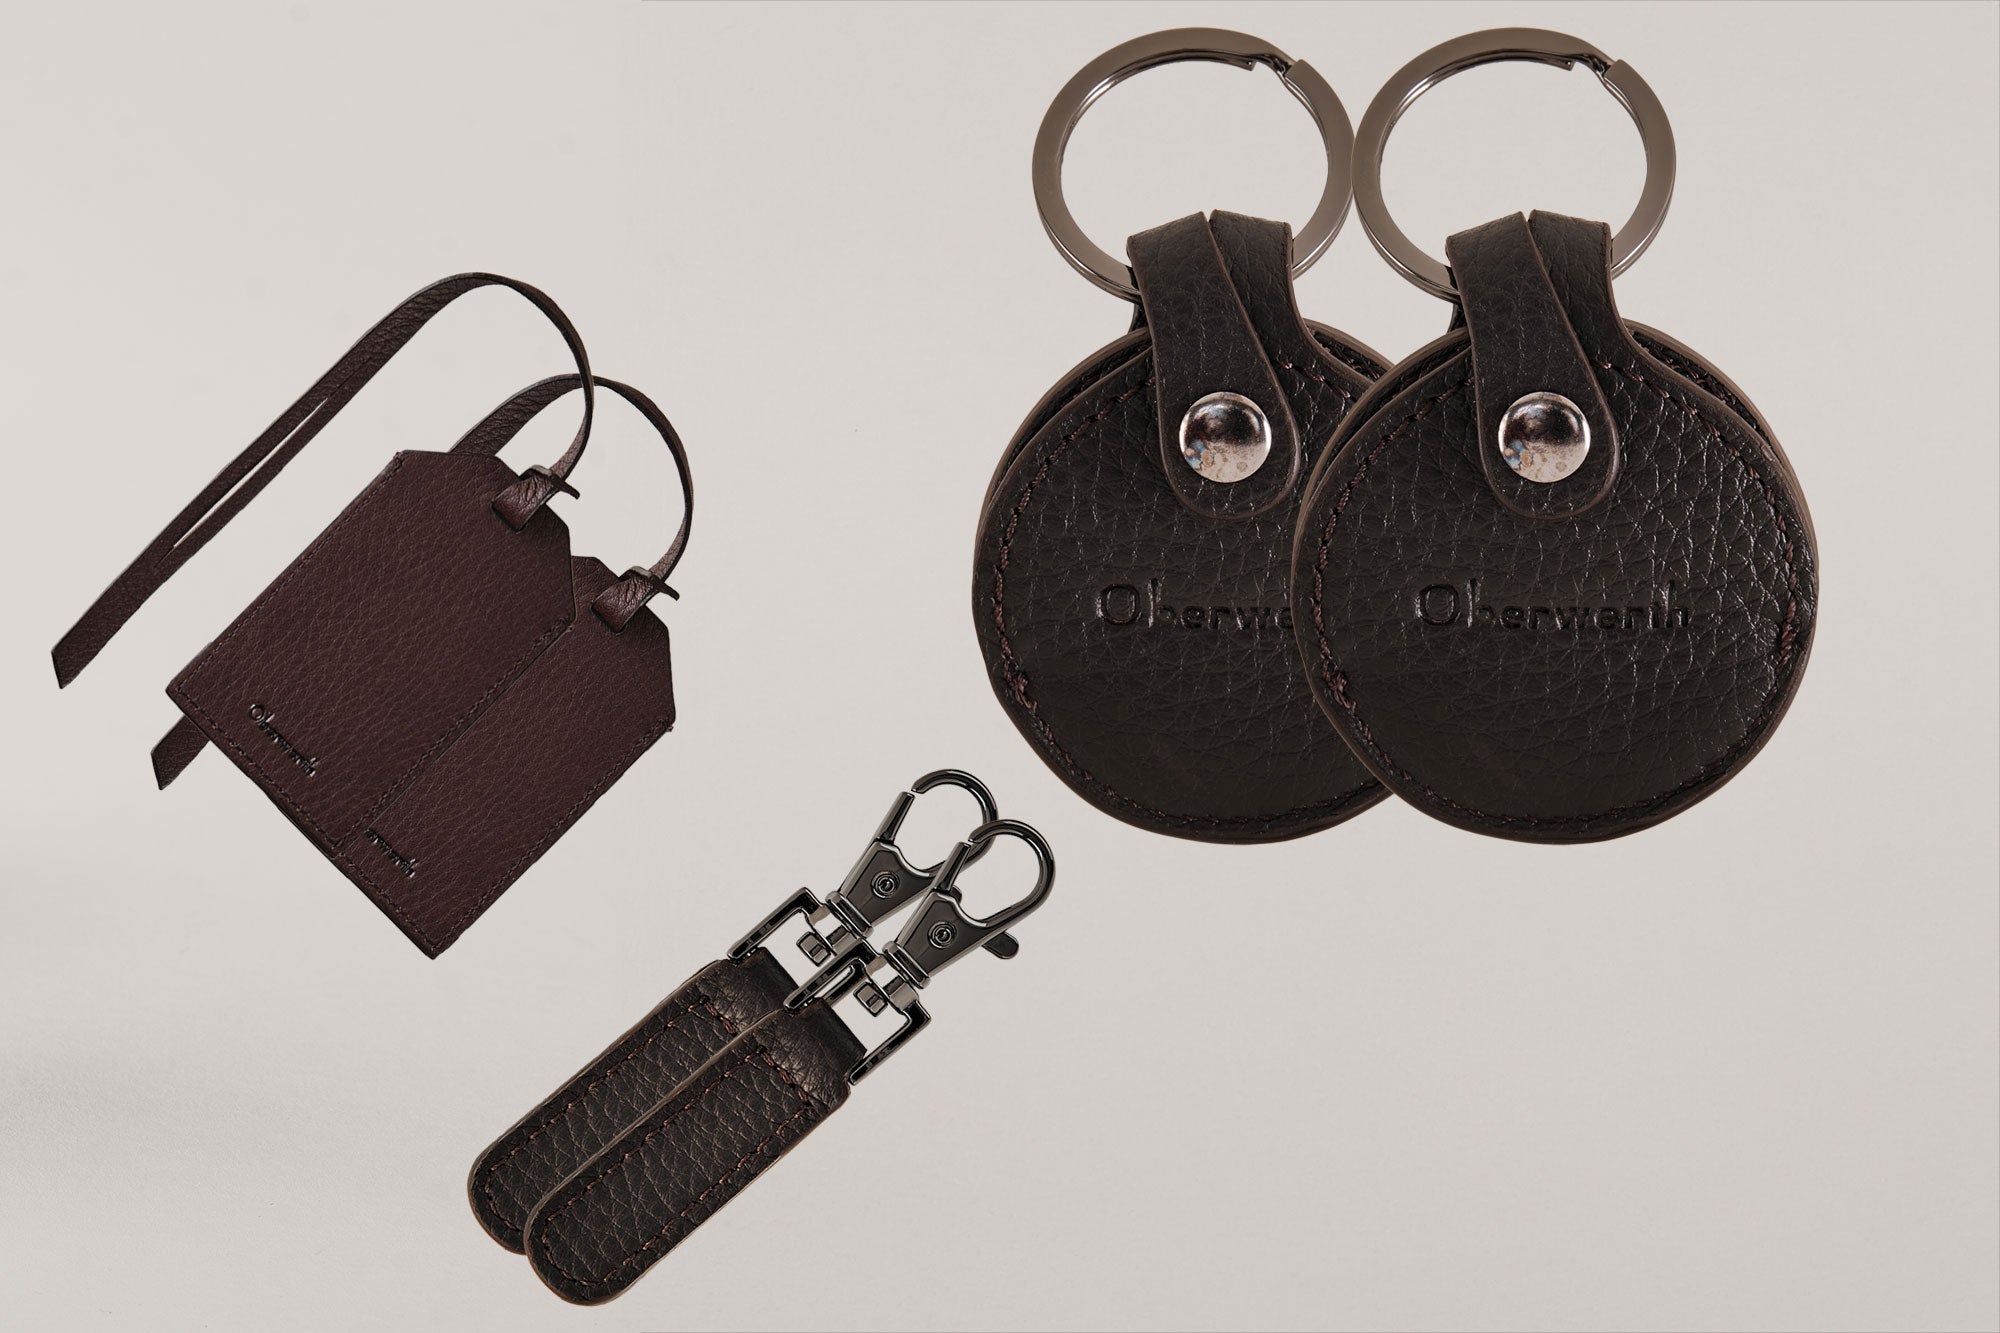 2 x Leather Luggage Tag + 2 x SpreeTag + 2 x Zipper Puller (dunkelbraun)